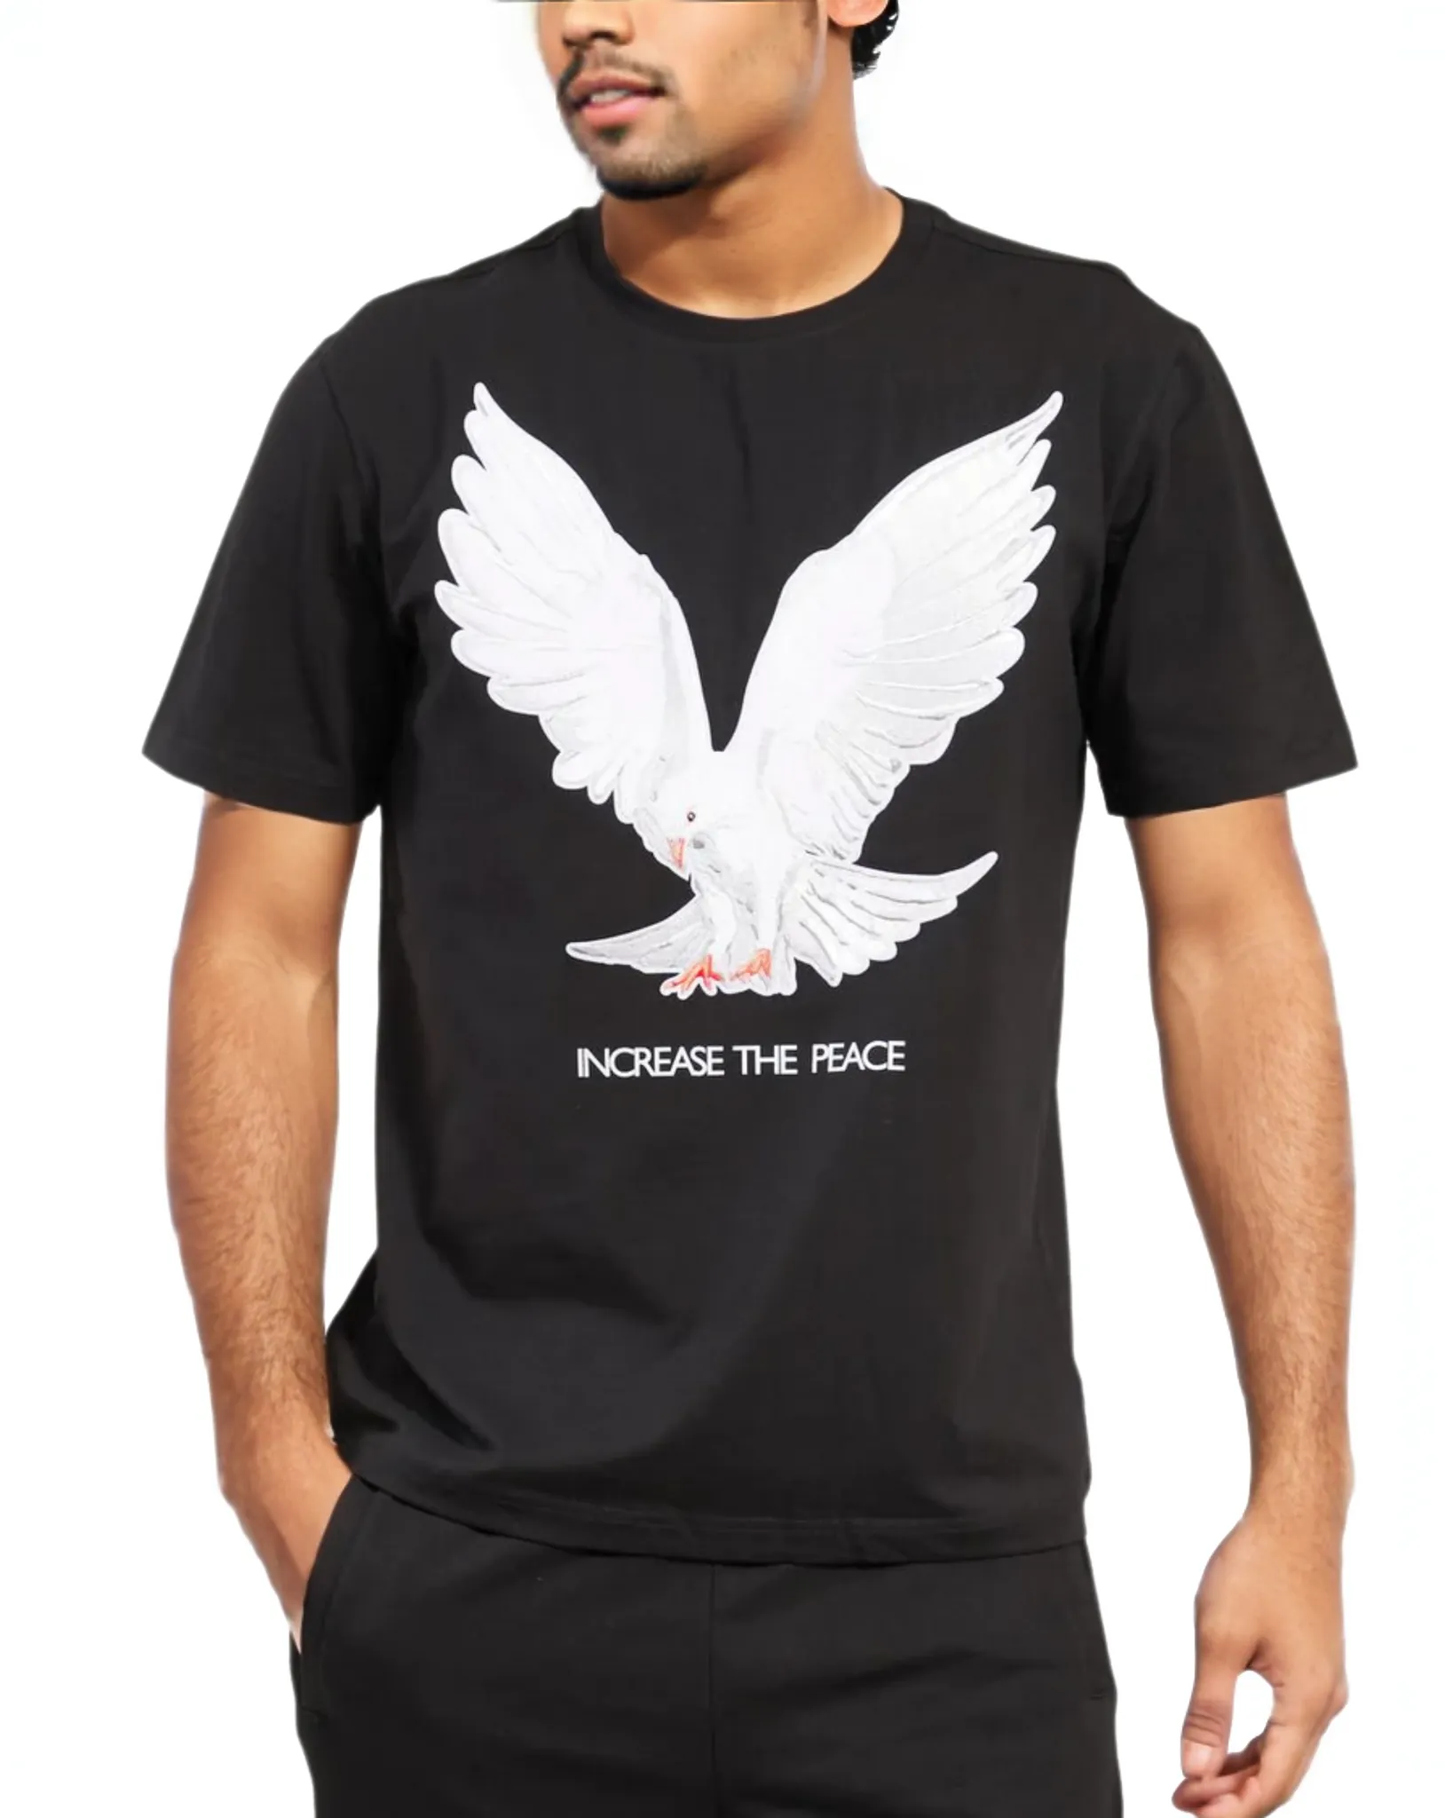 Increase The Peace Shirt